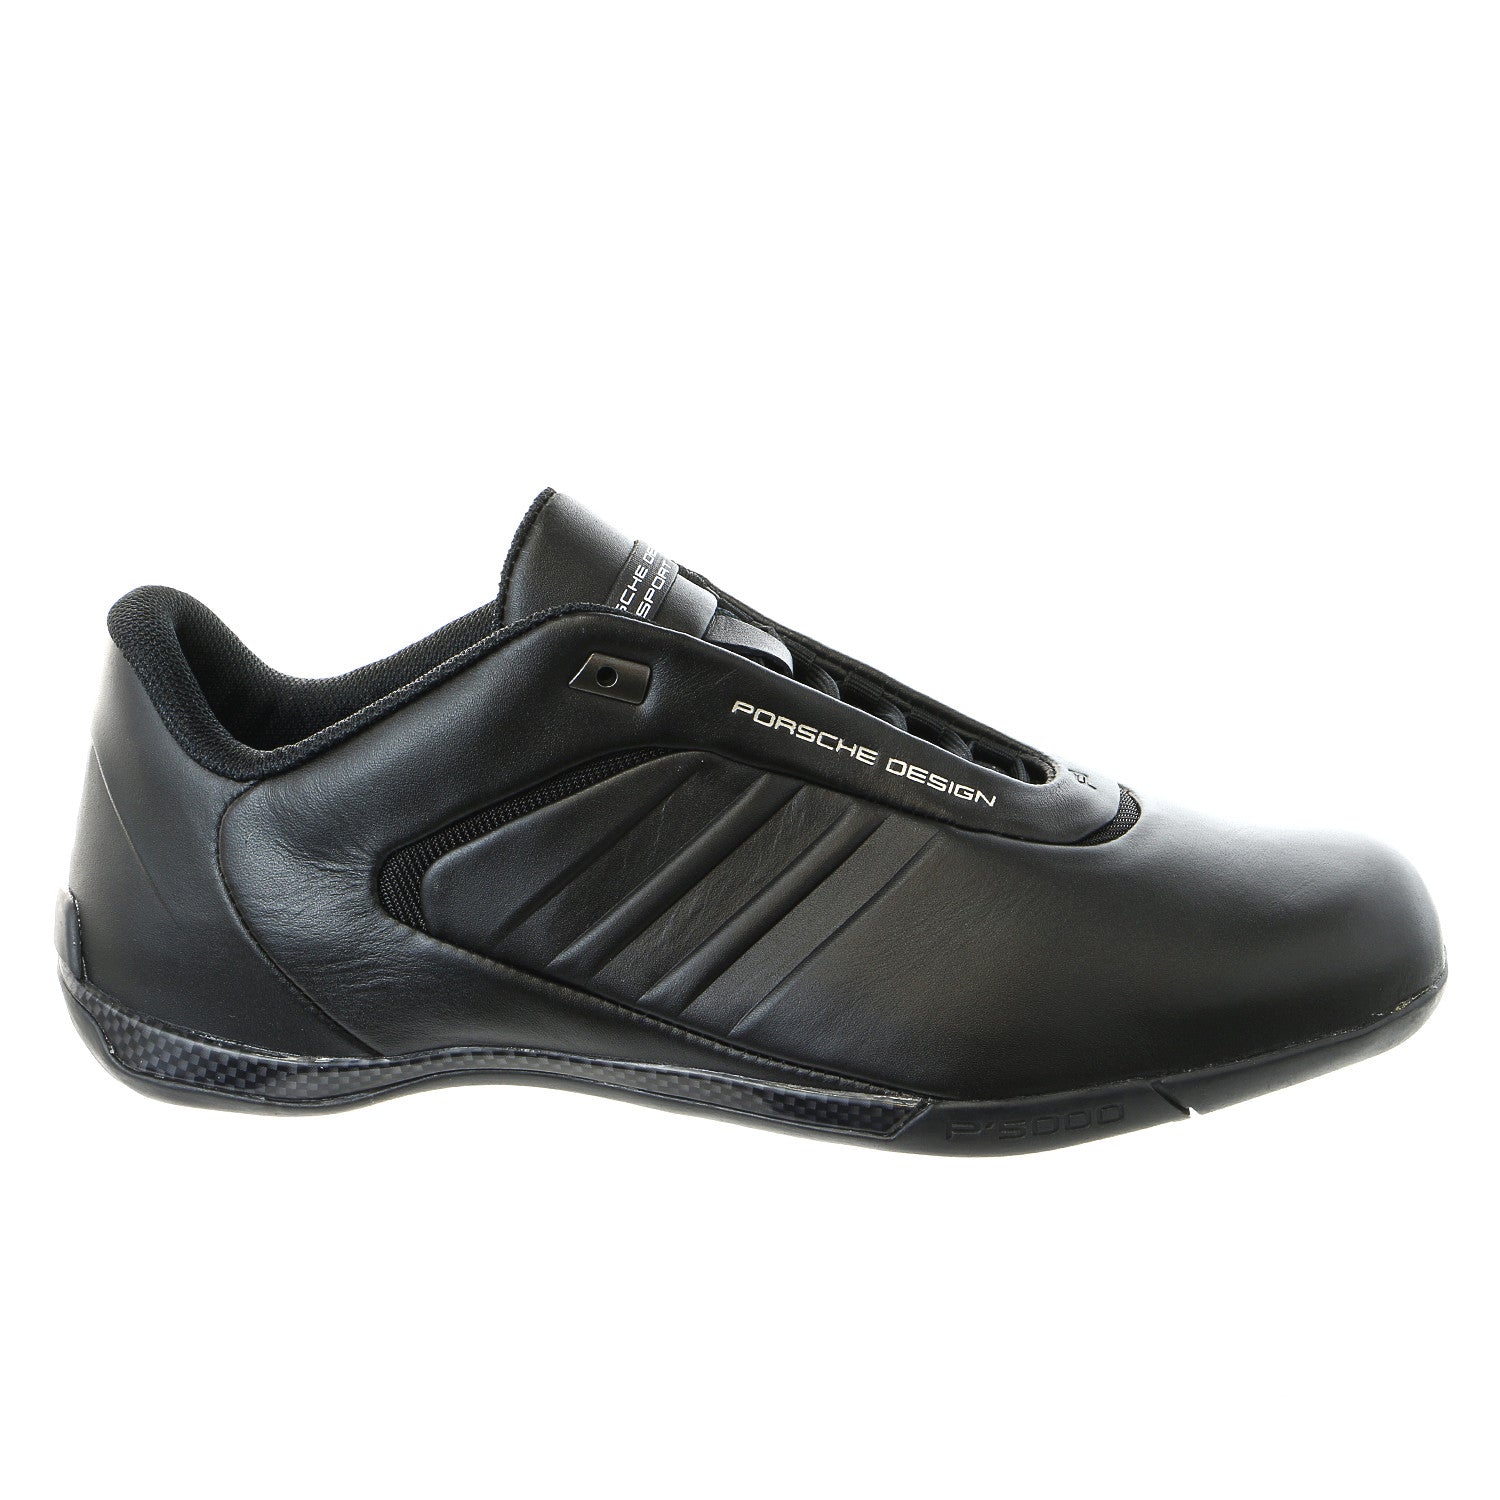 Porsche Design M Athletic III Leather Fashion Sneaker Driving Shoe - B ...